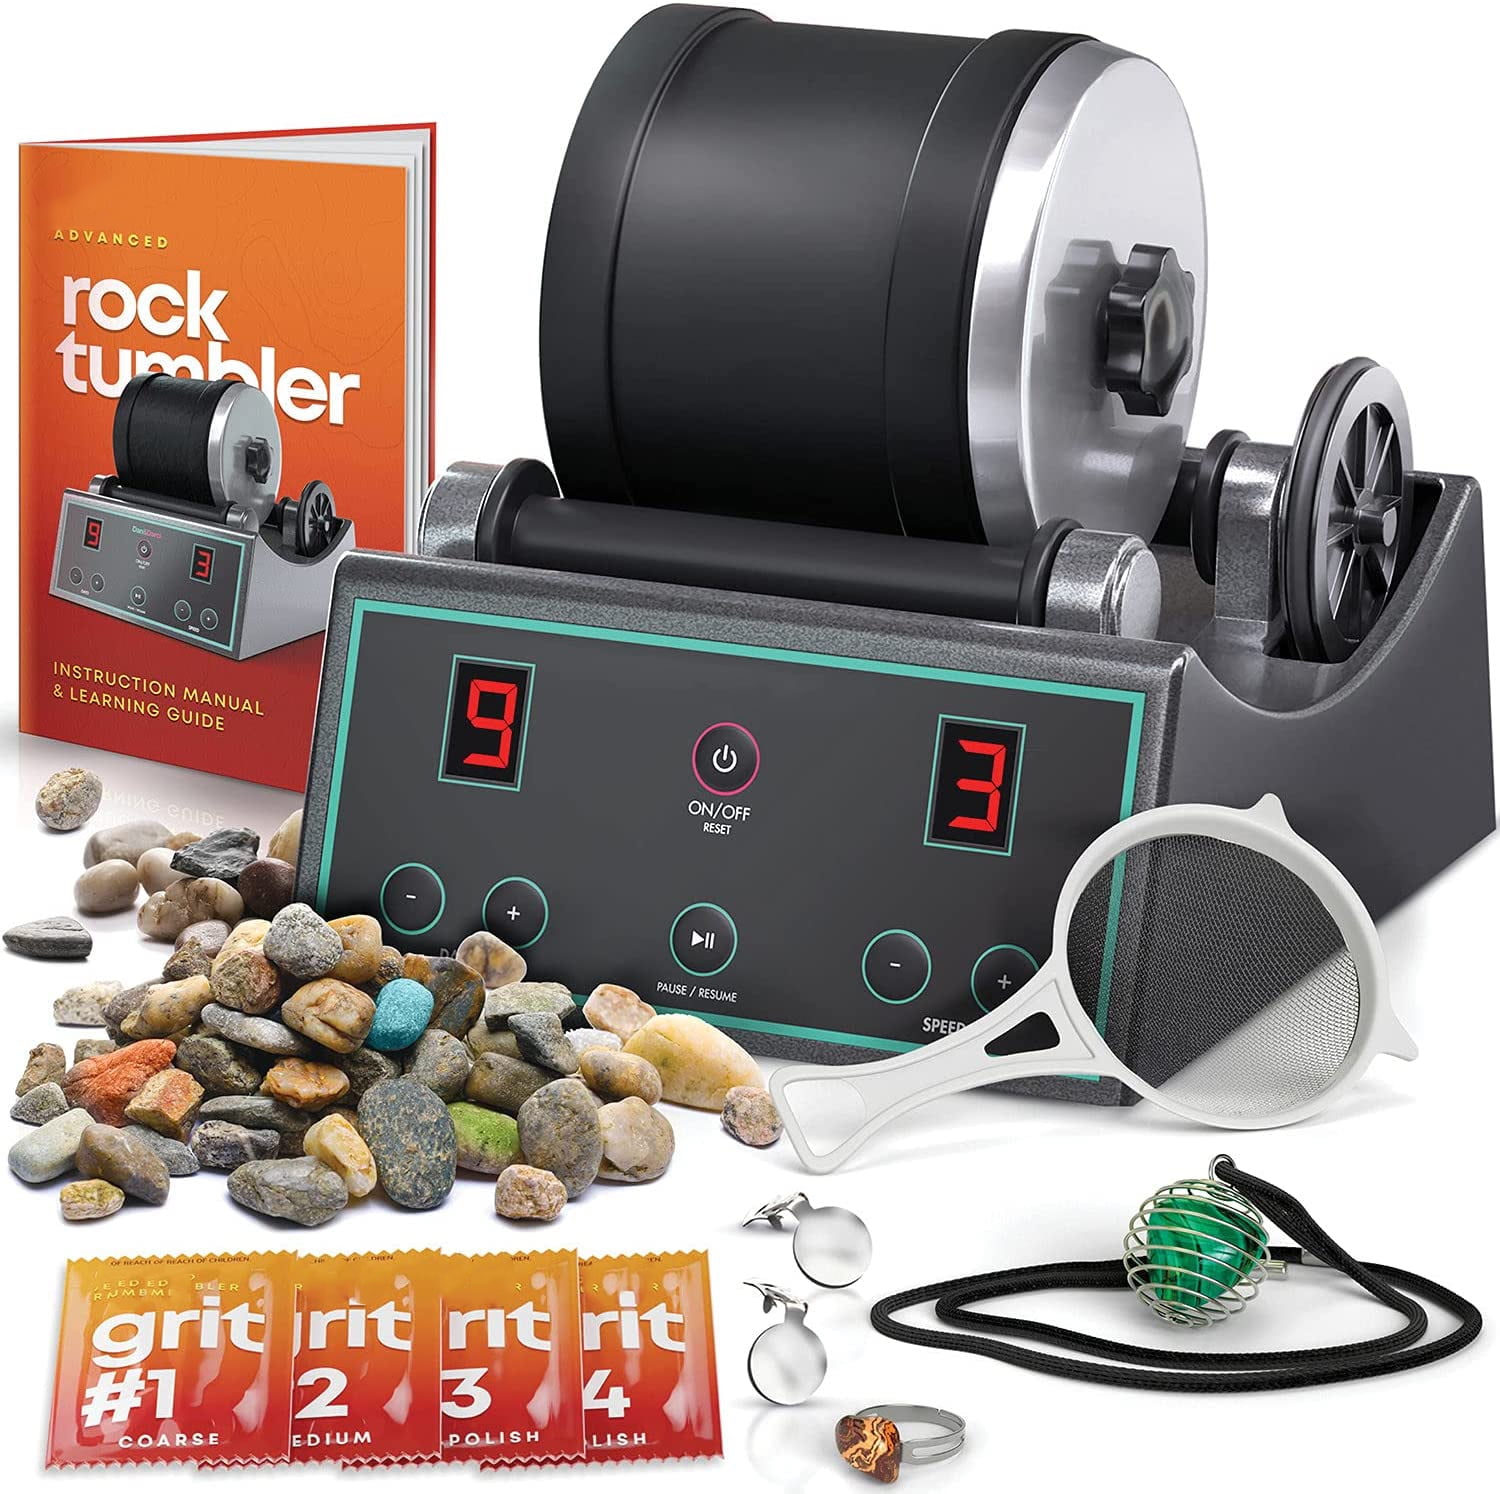 Advanced Professional Rock Tumbler Kit with Digital 9-day Polishing timer & 3 